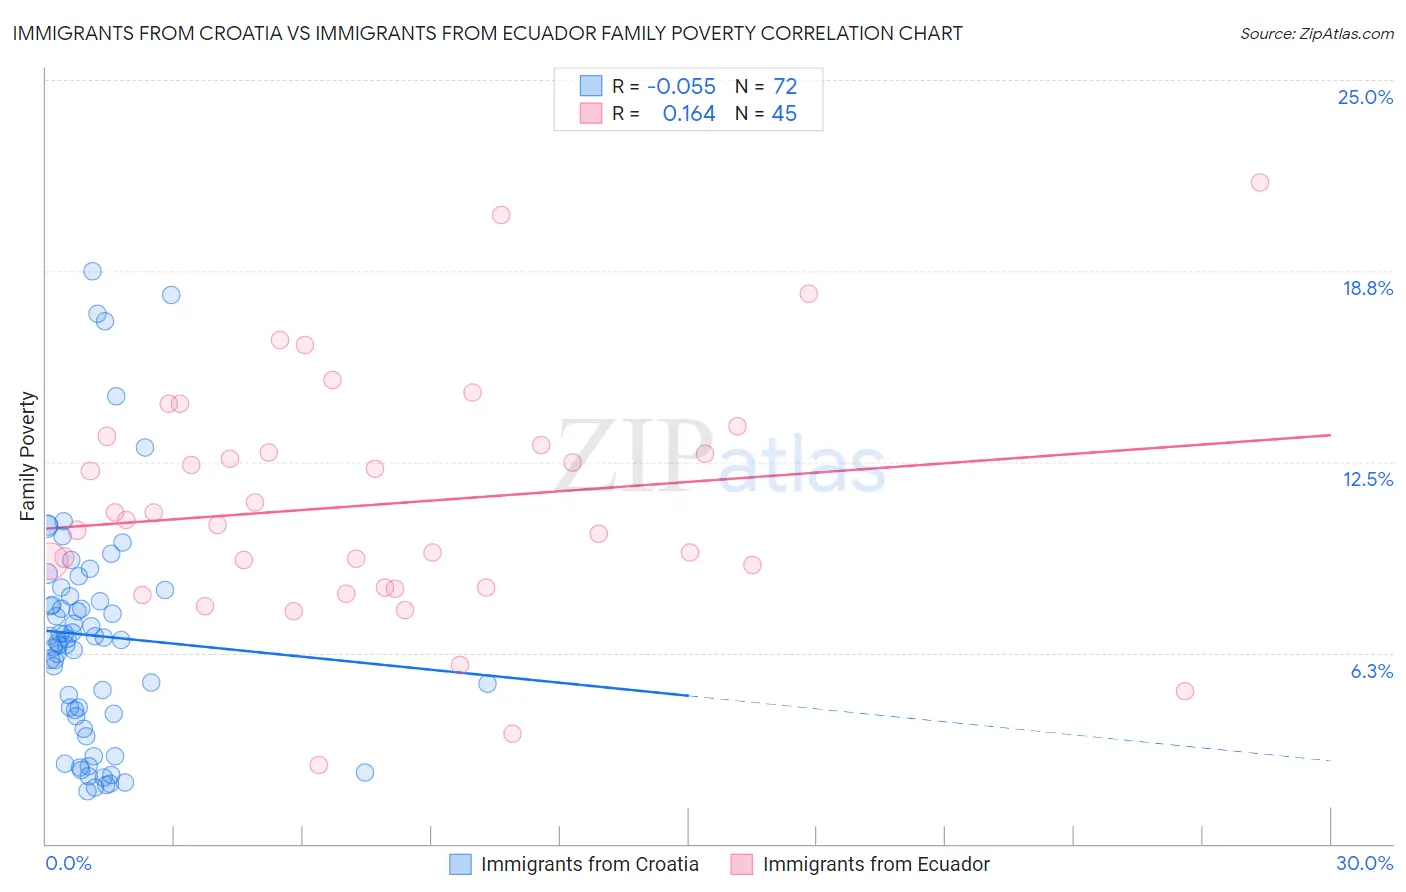 Immigrants from Croatia vs Immigrants from Ecuador Family Poverty